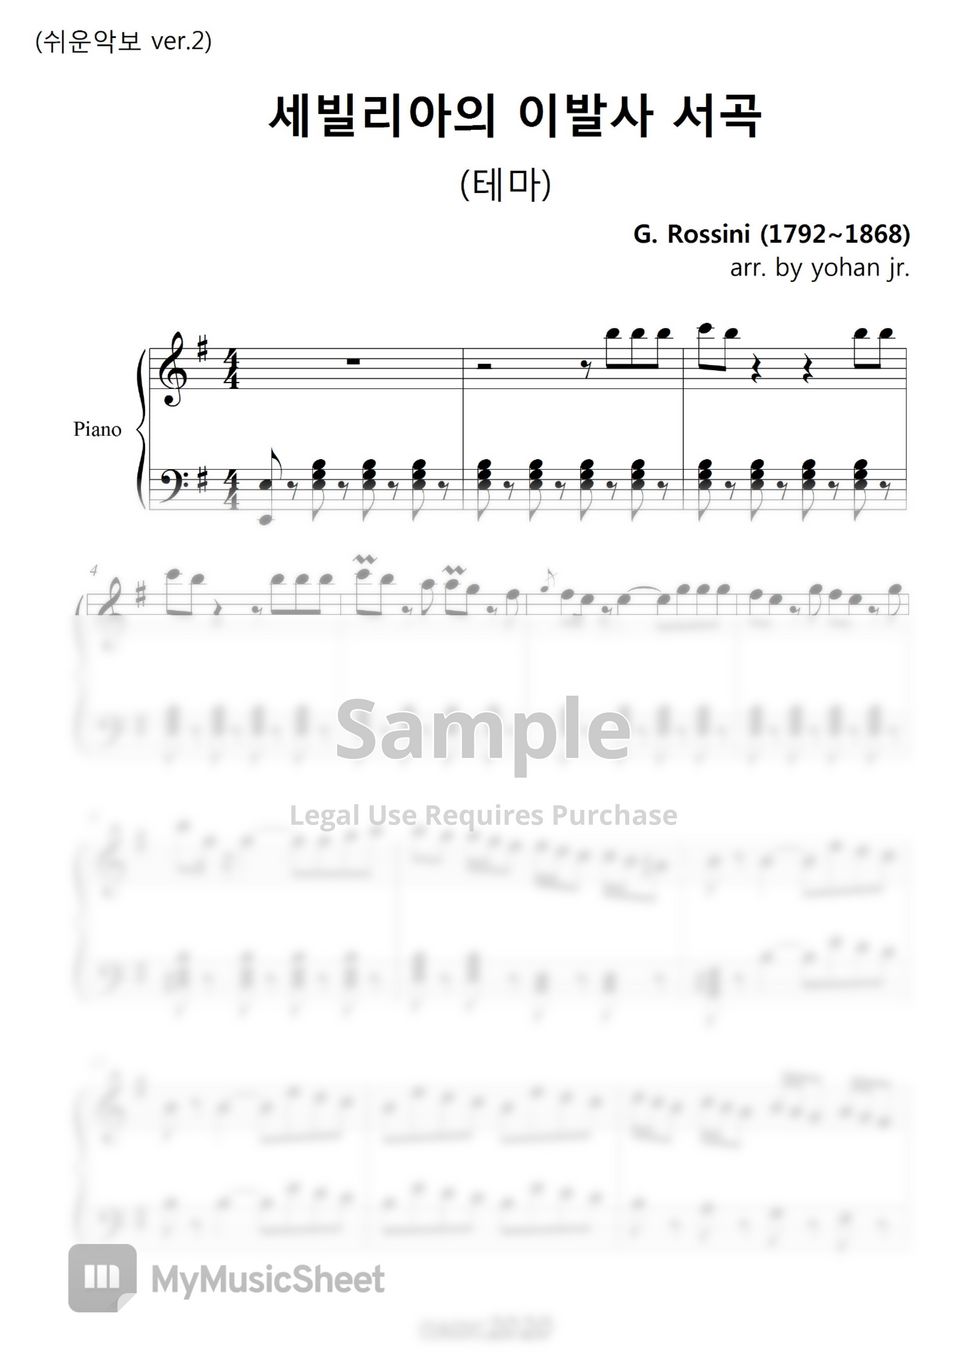 G. Rossini - The Barber of Seville (e minor) (easy piano ver.2) by classic2020